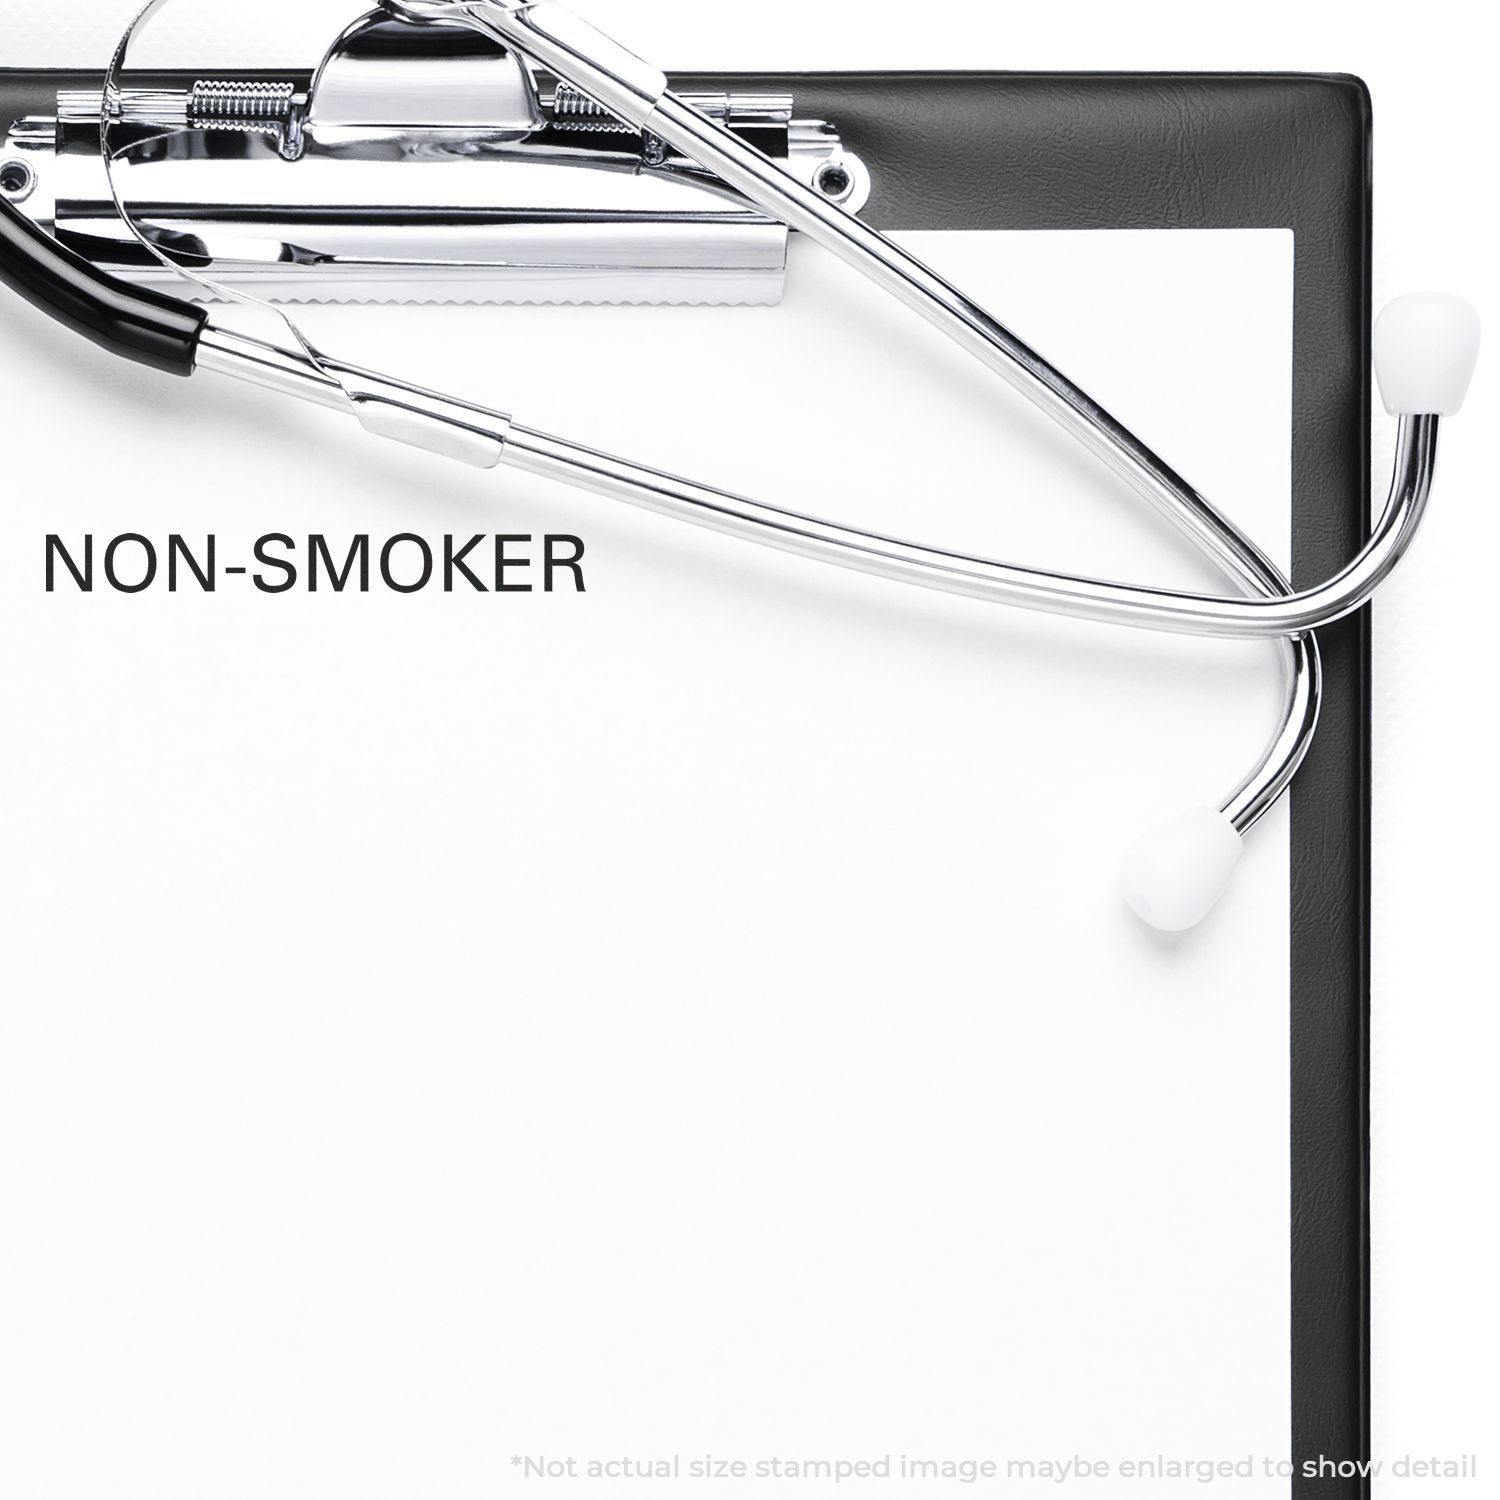 In Use Slim Pre-Inked Non-Smoker Stamp Image